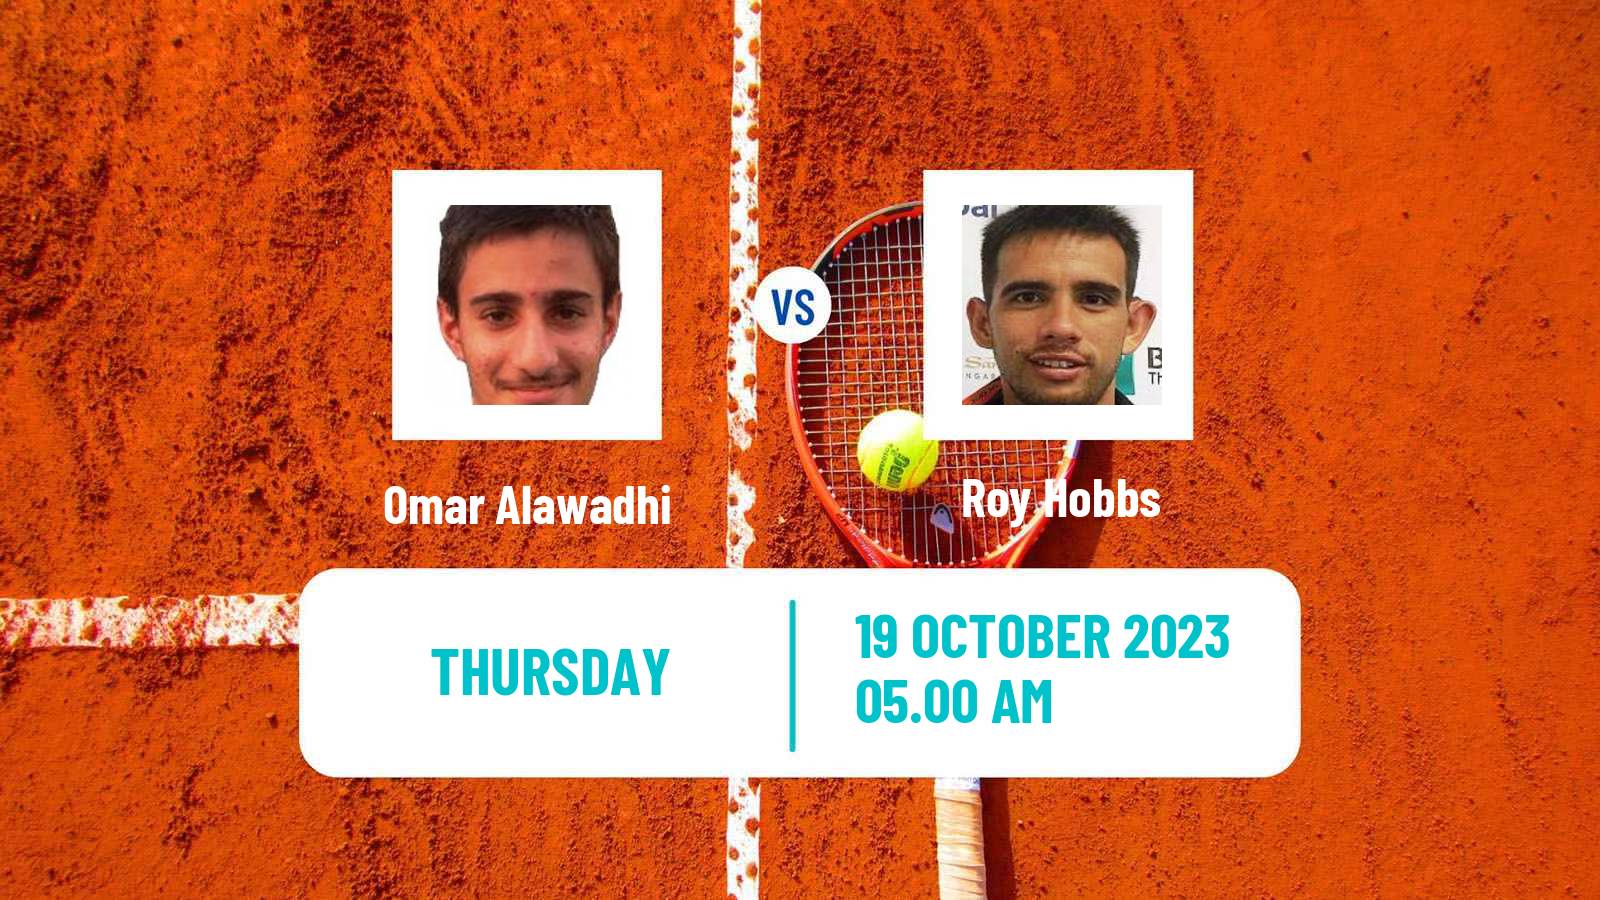 Tennis Davis Cup Group IV Omar Alawadhi - Roy Hobbs